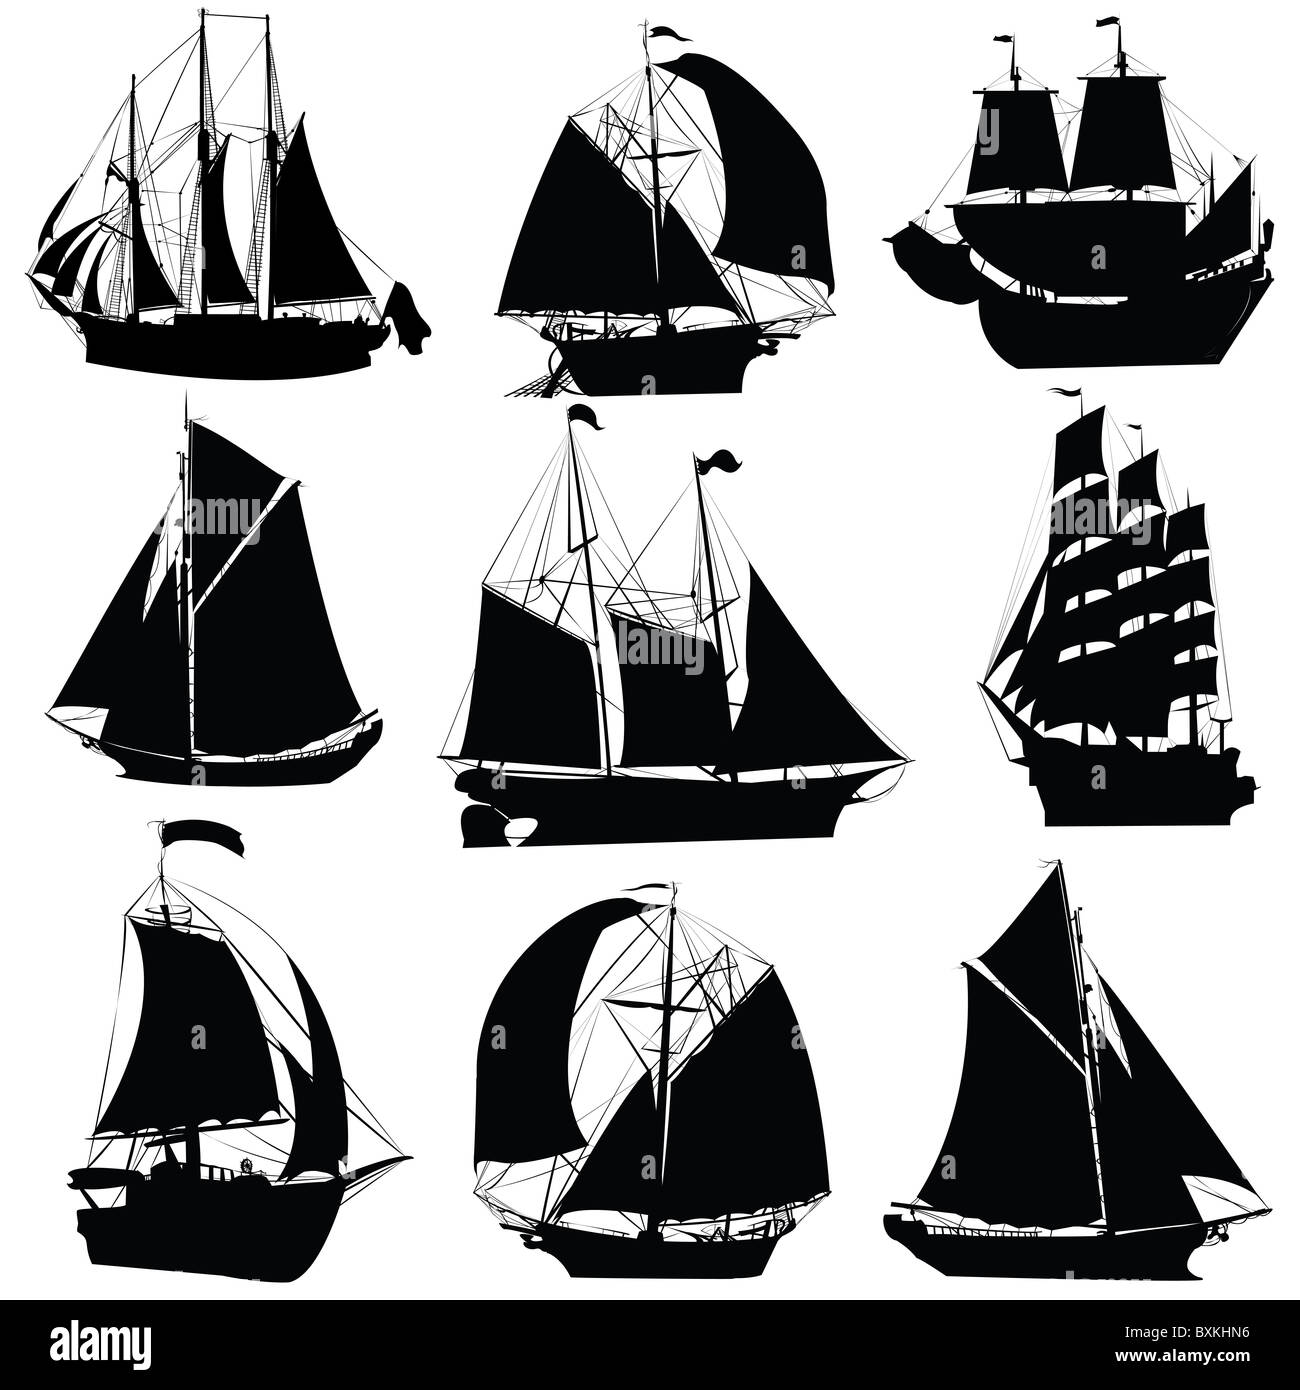 Sailing ships collection Stock Photo